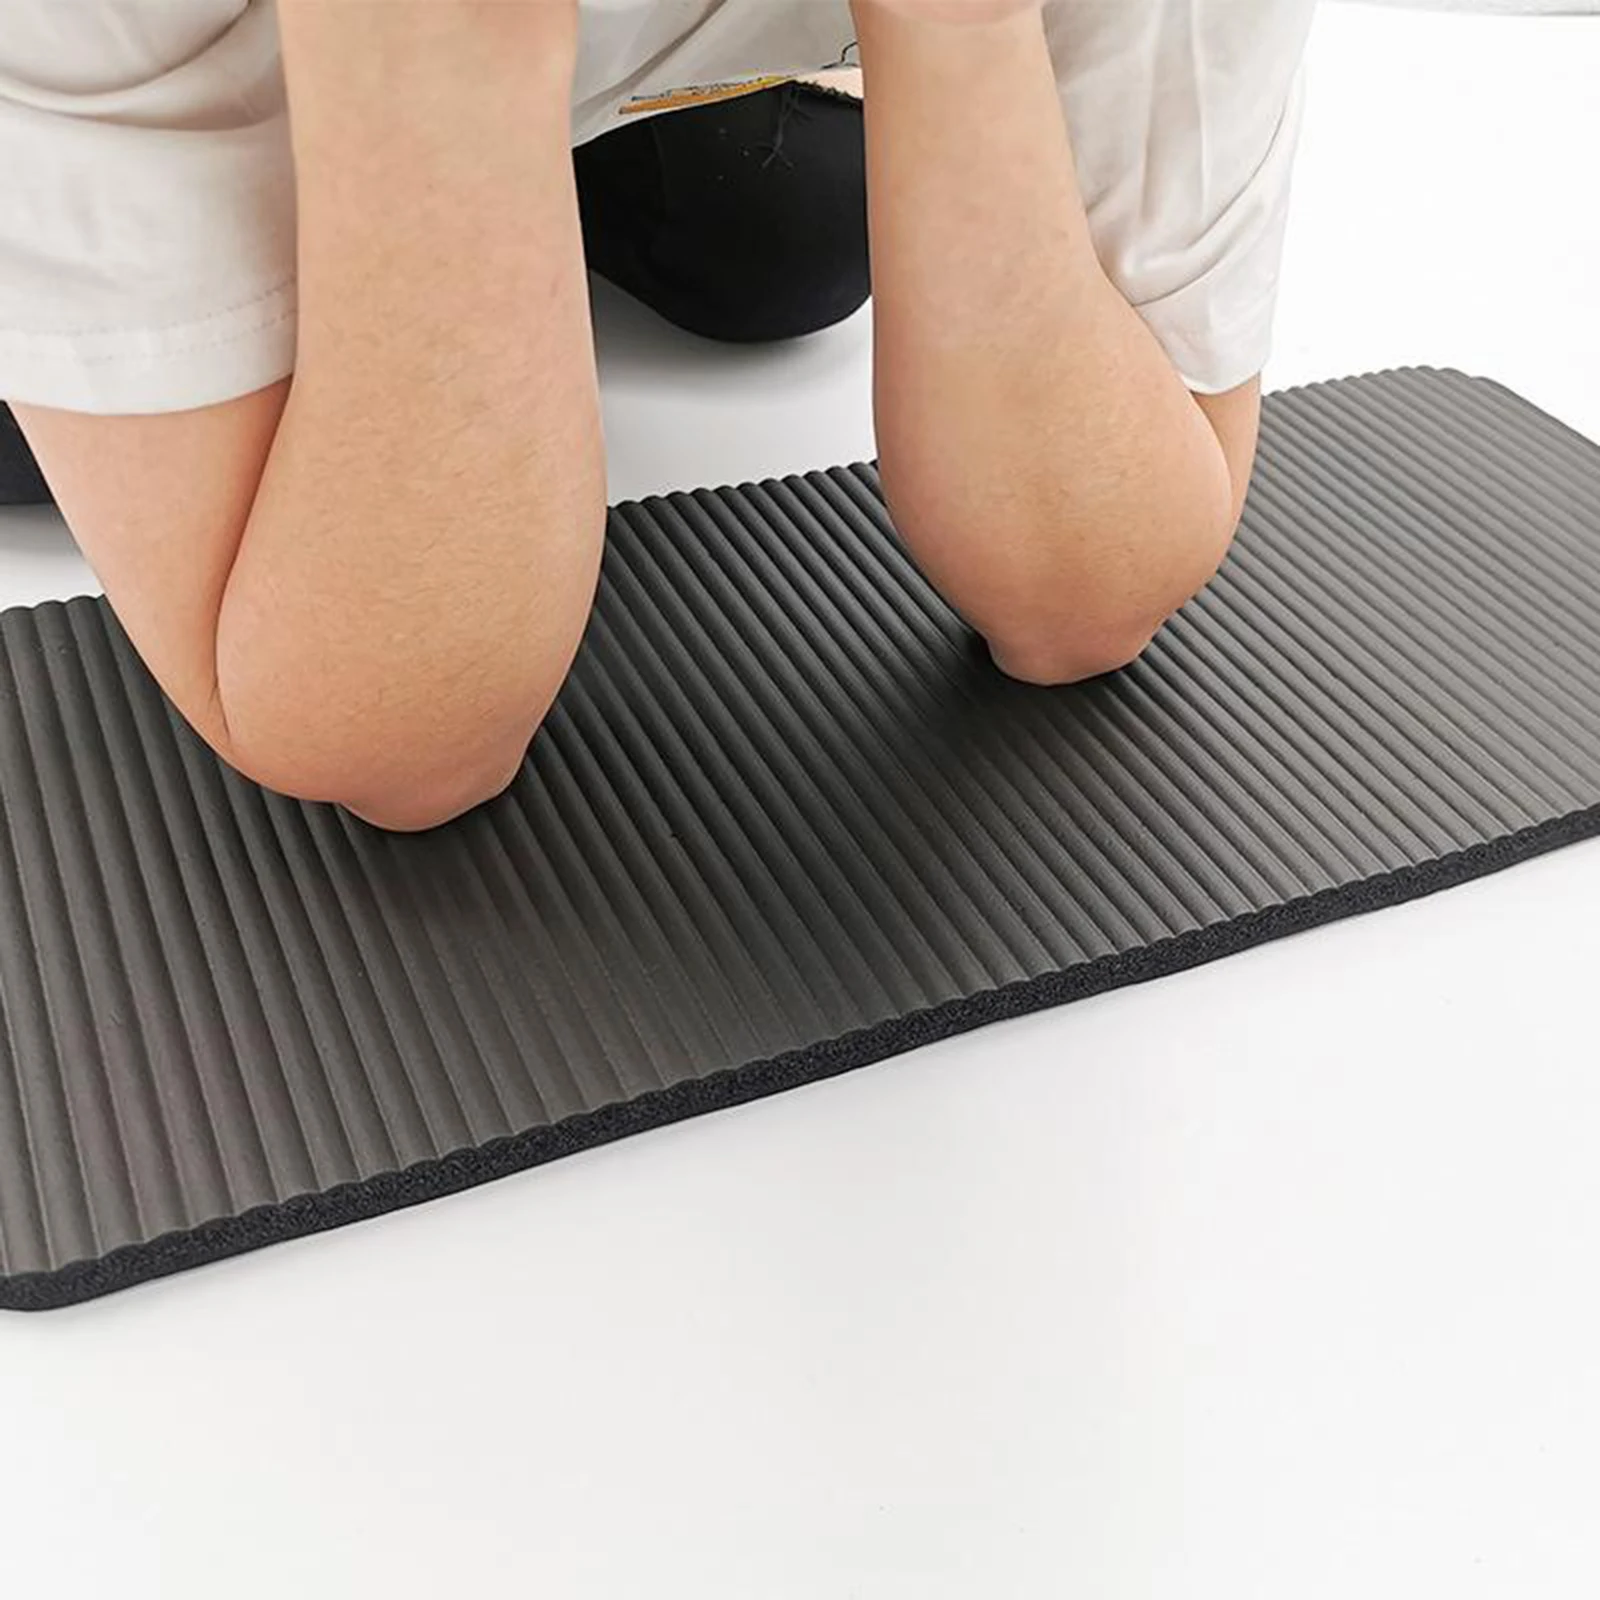 Yoga Knee Pad Cushion Anti-Slip Thick Exercise Travel Fitness Mat Mat Floor P5J9 